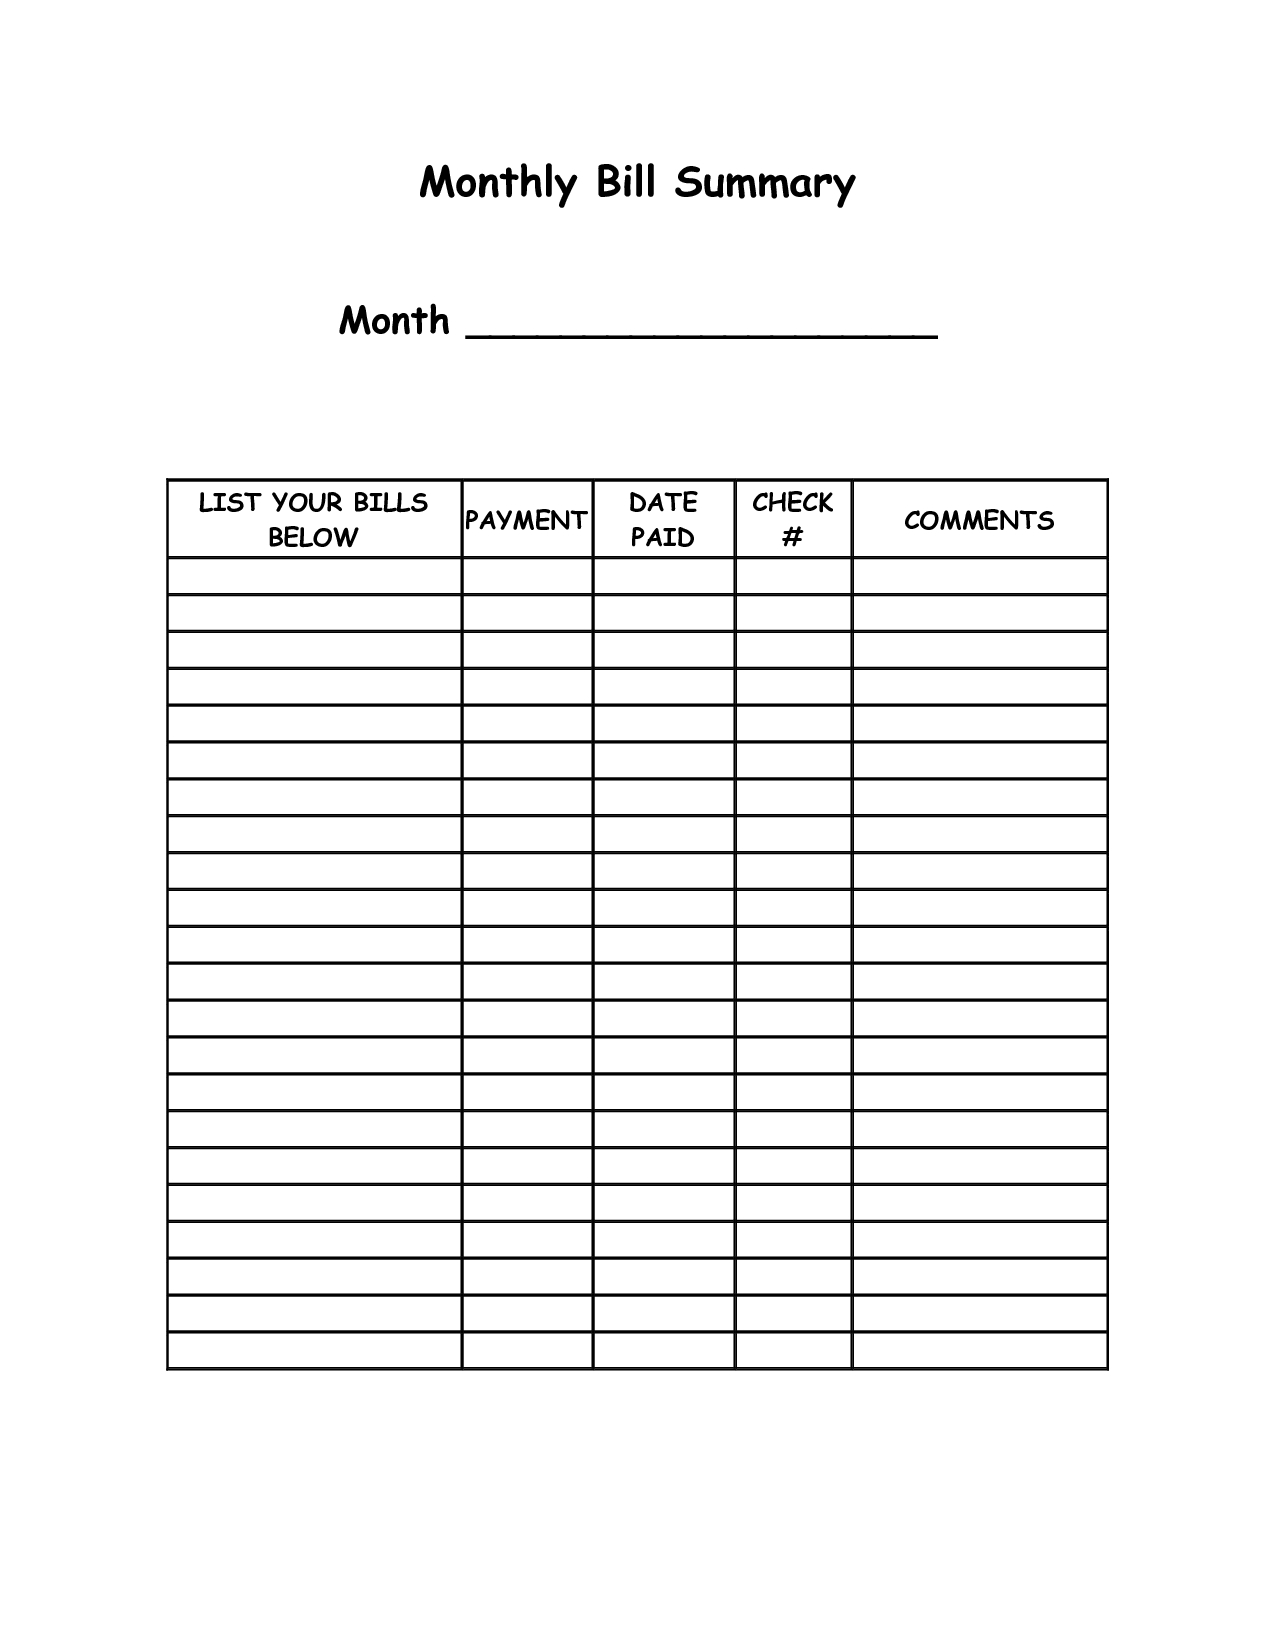 Monthly Bill Summary Doc | Organizing Monthly Bills, Bill-Monthly Bills List Printable